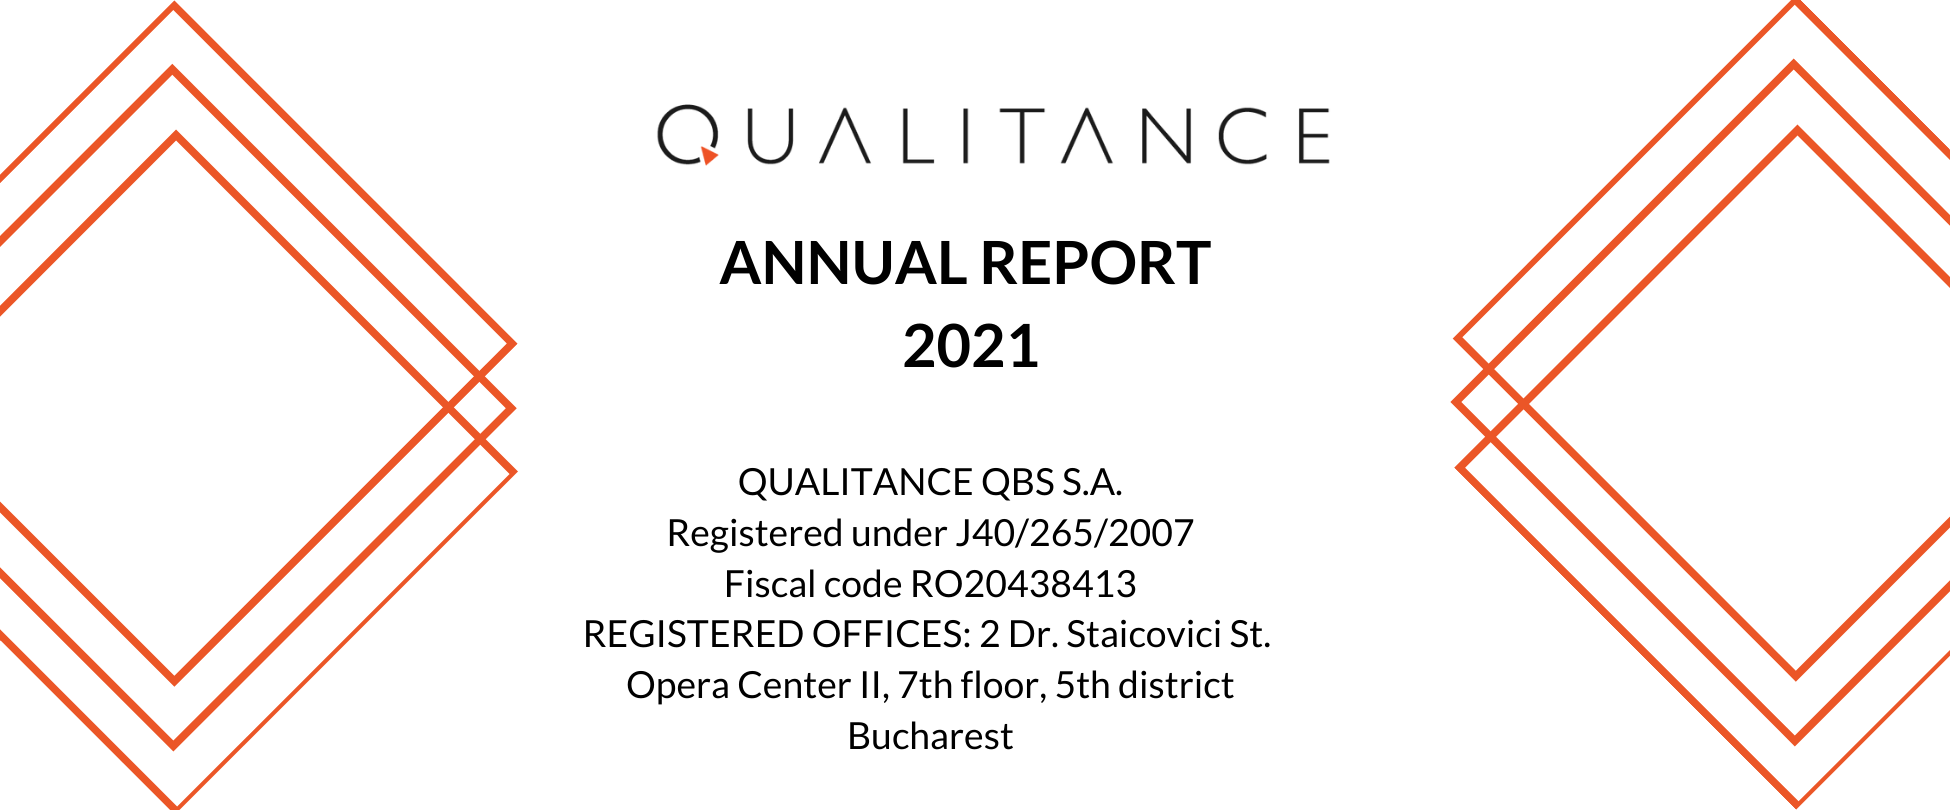 2021 Annual Report QUALITANCE